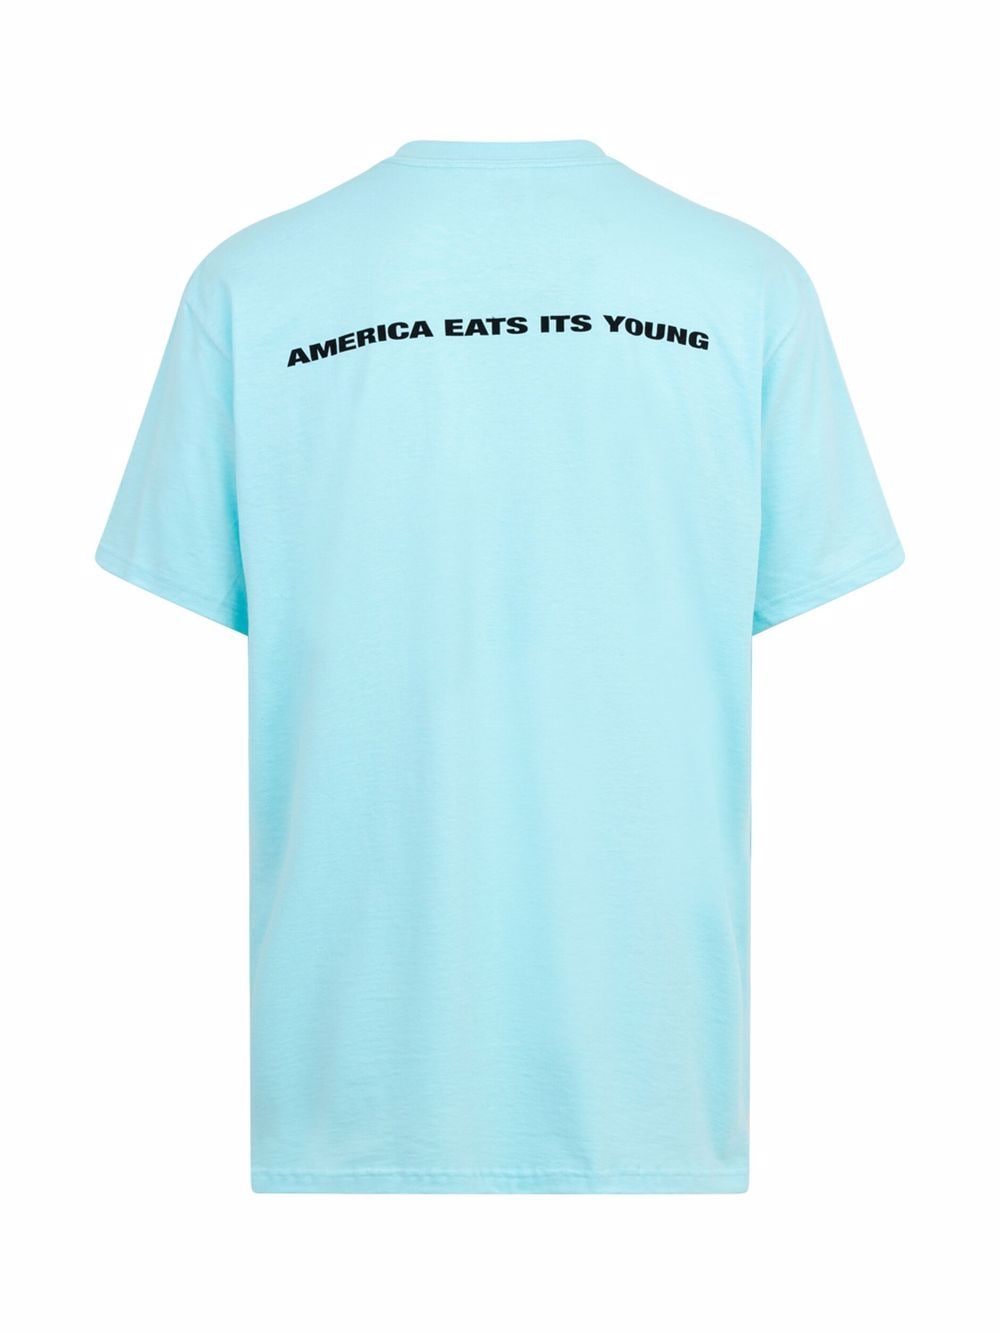 America Eats Its Young T-shirt